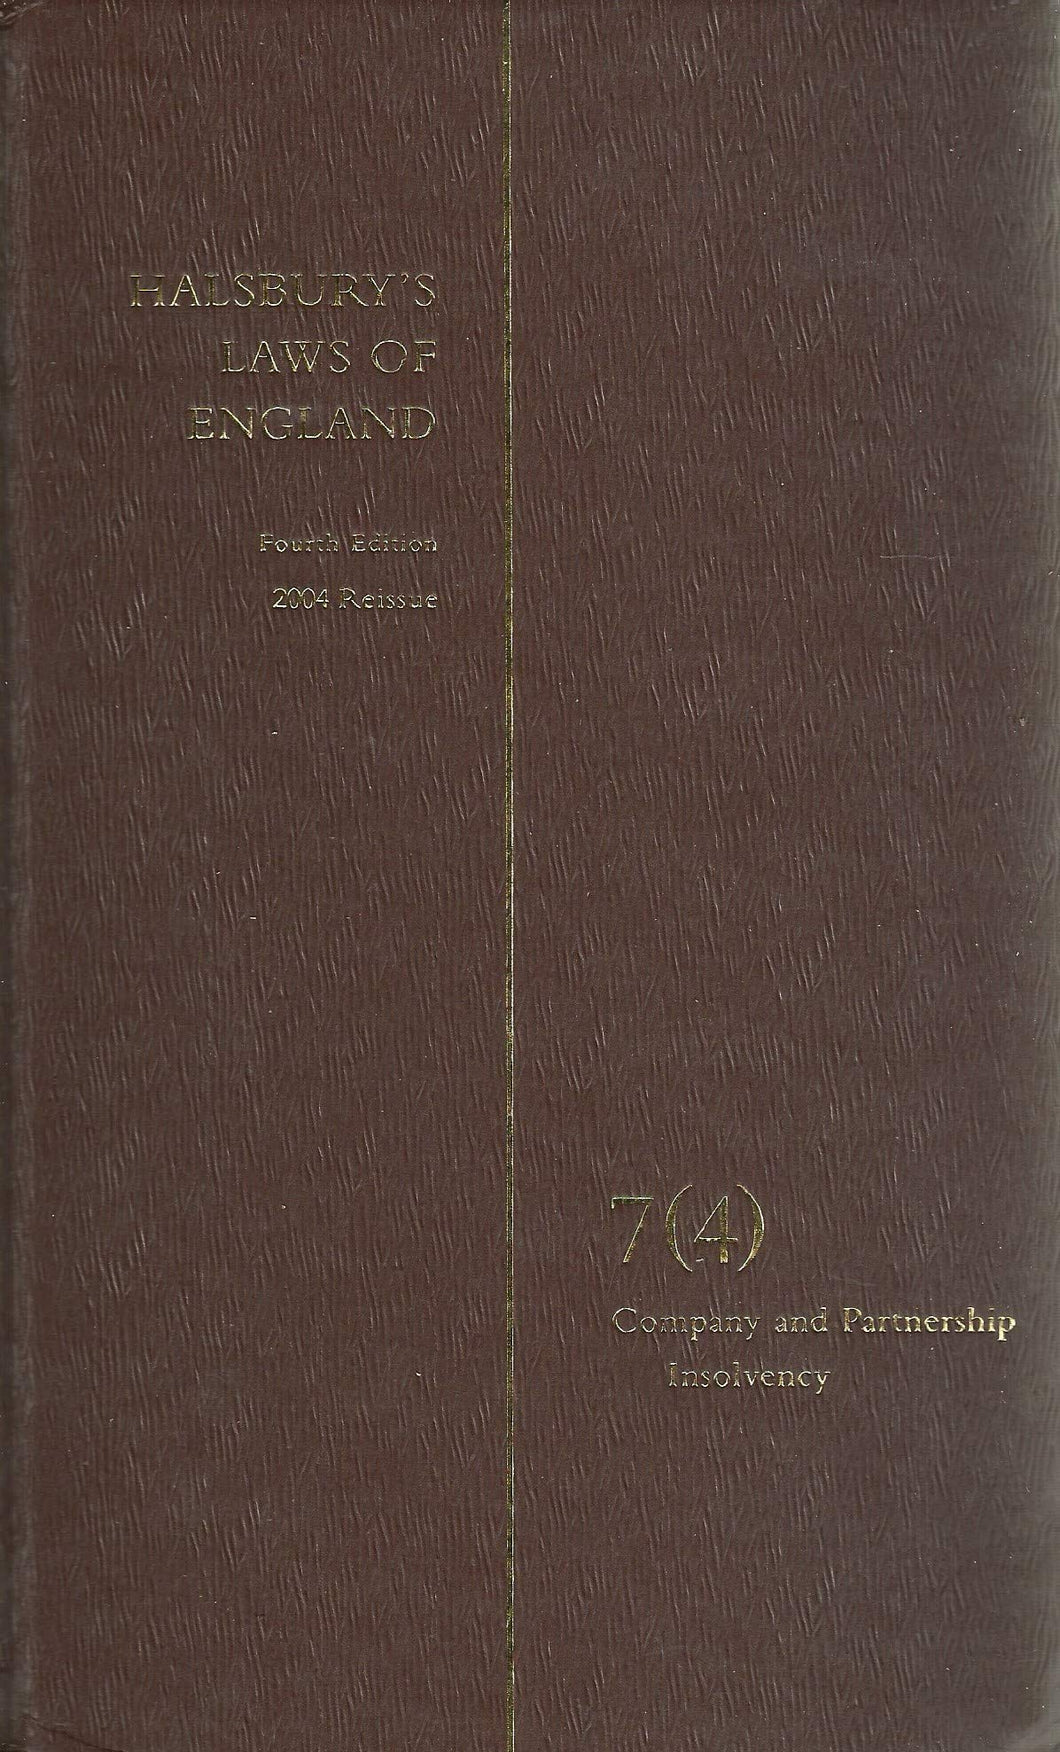 Halsbury's laws of England Vol 7(4) 2004